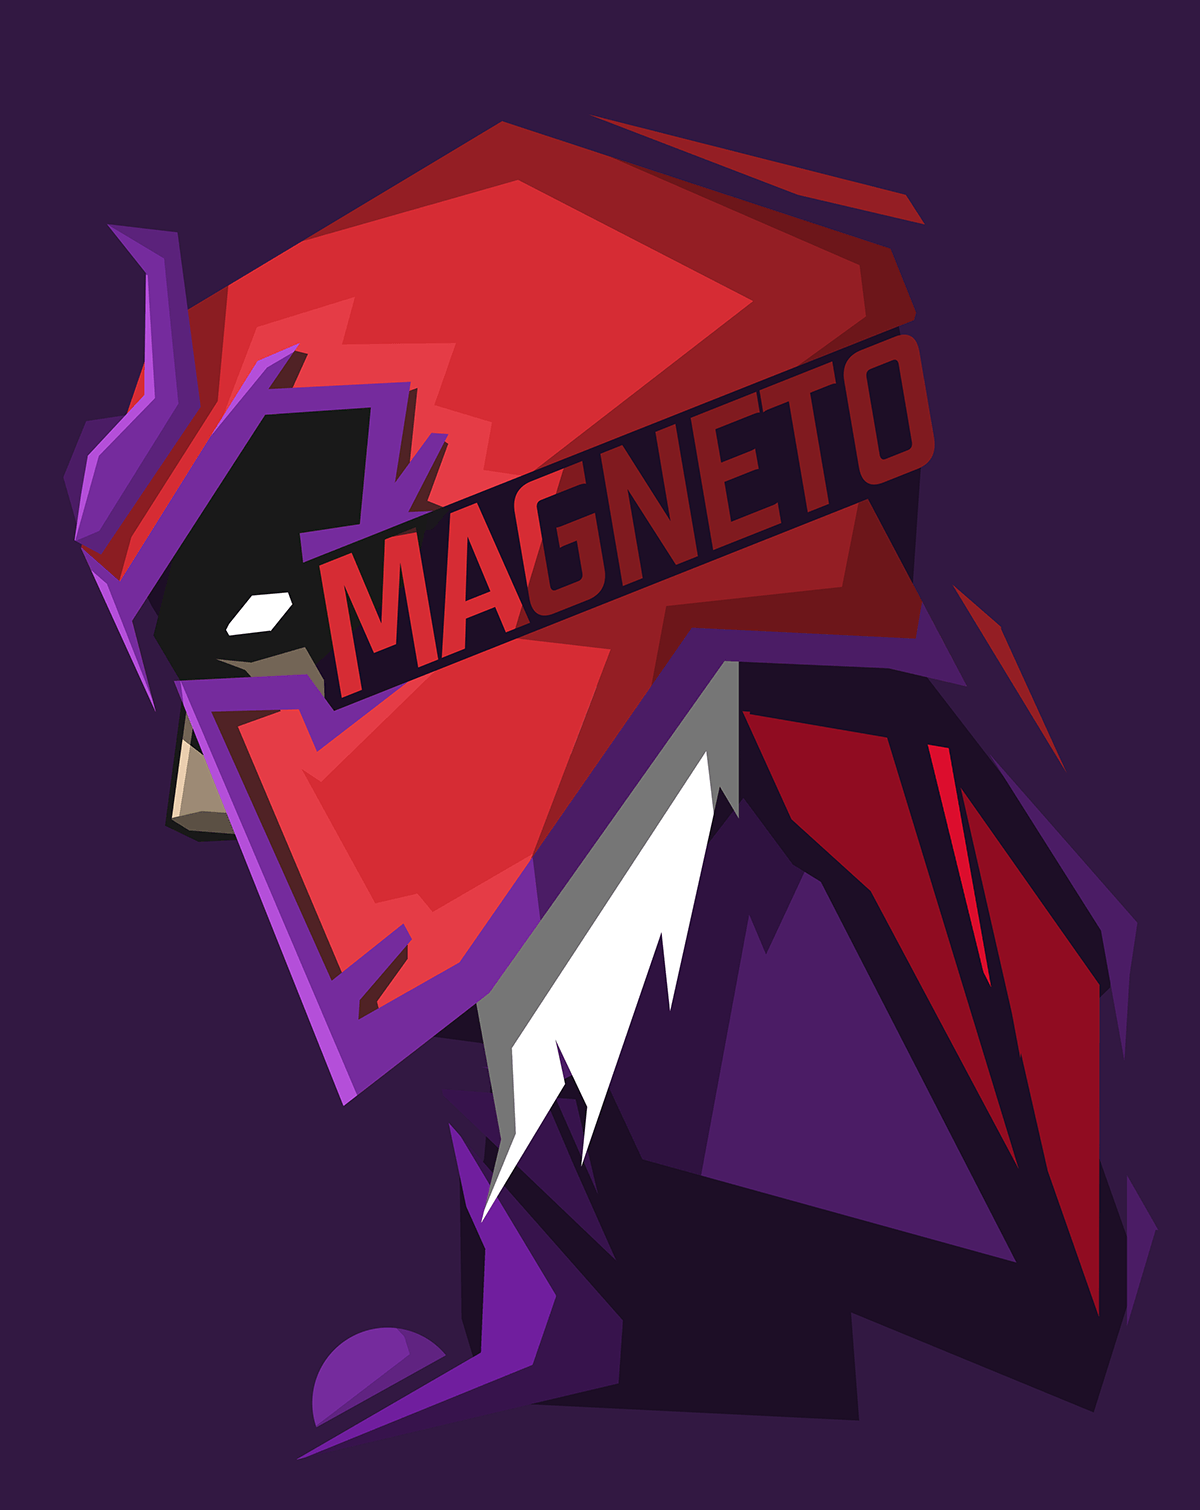 Magneto Logo - Wallpaper : illustration, purple background, text, logo, cartoon